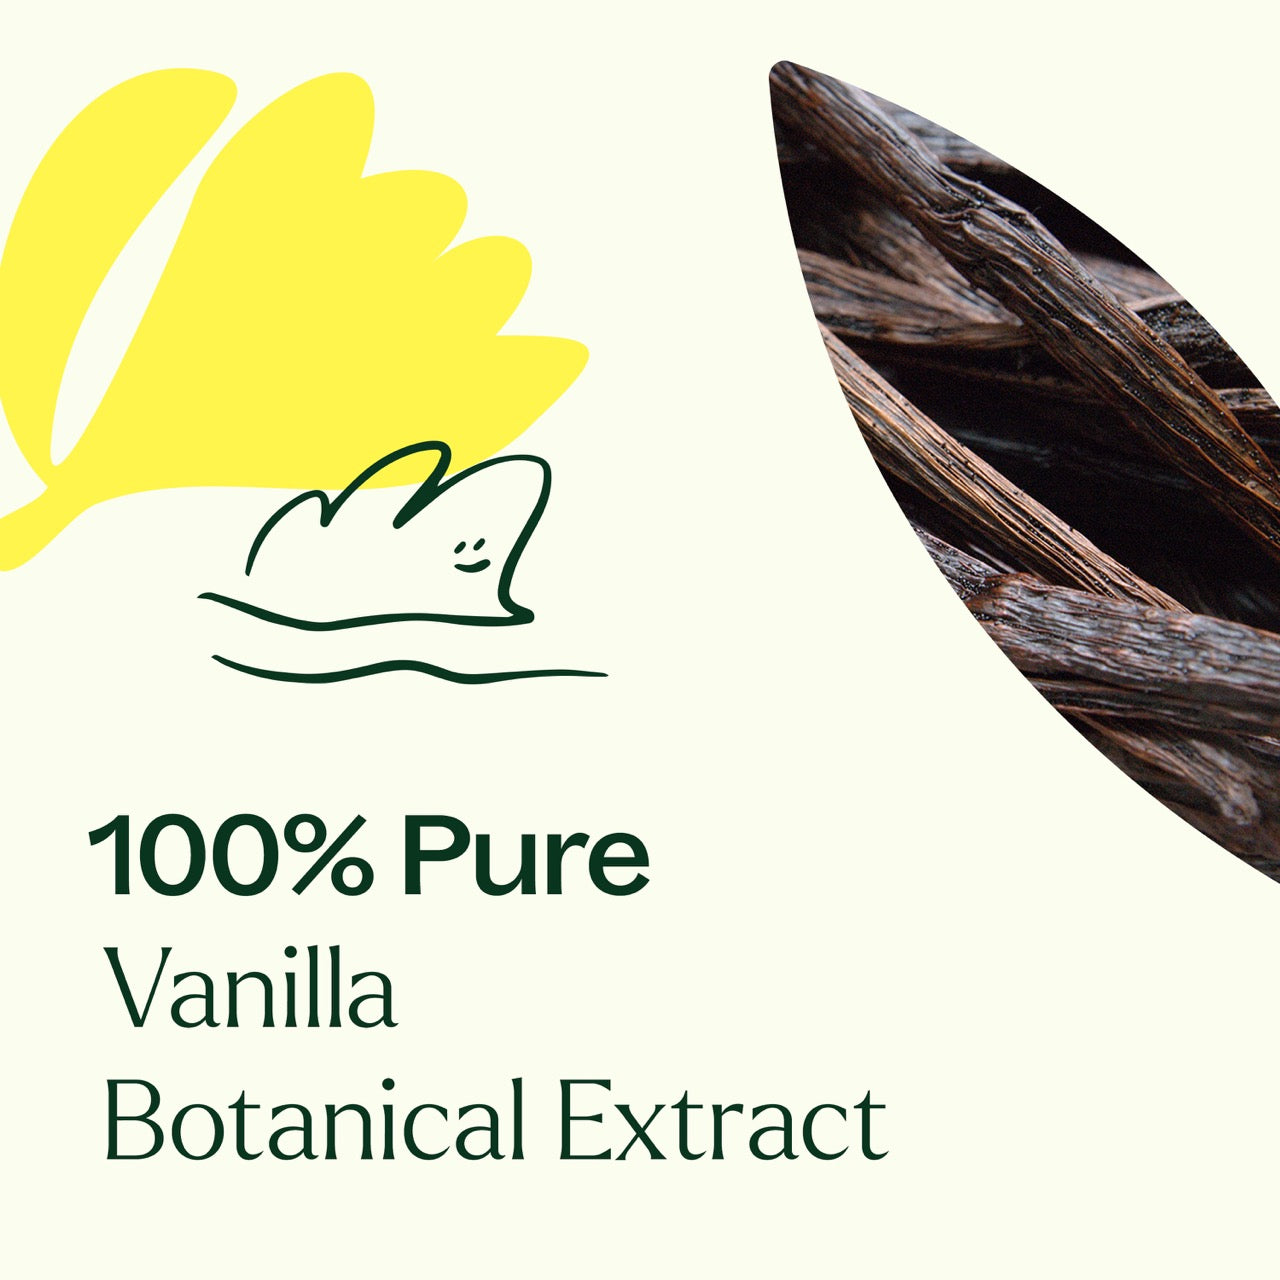 100% pure Vanilla Botanical Extract